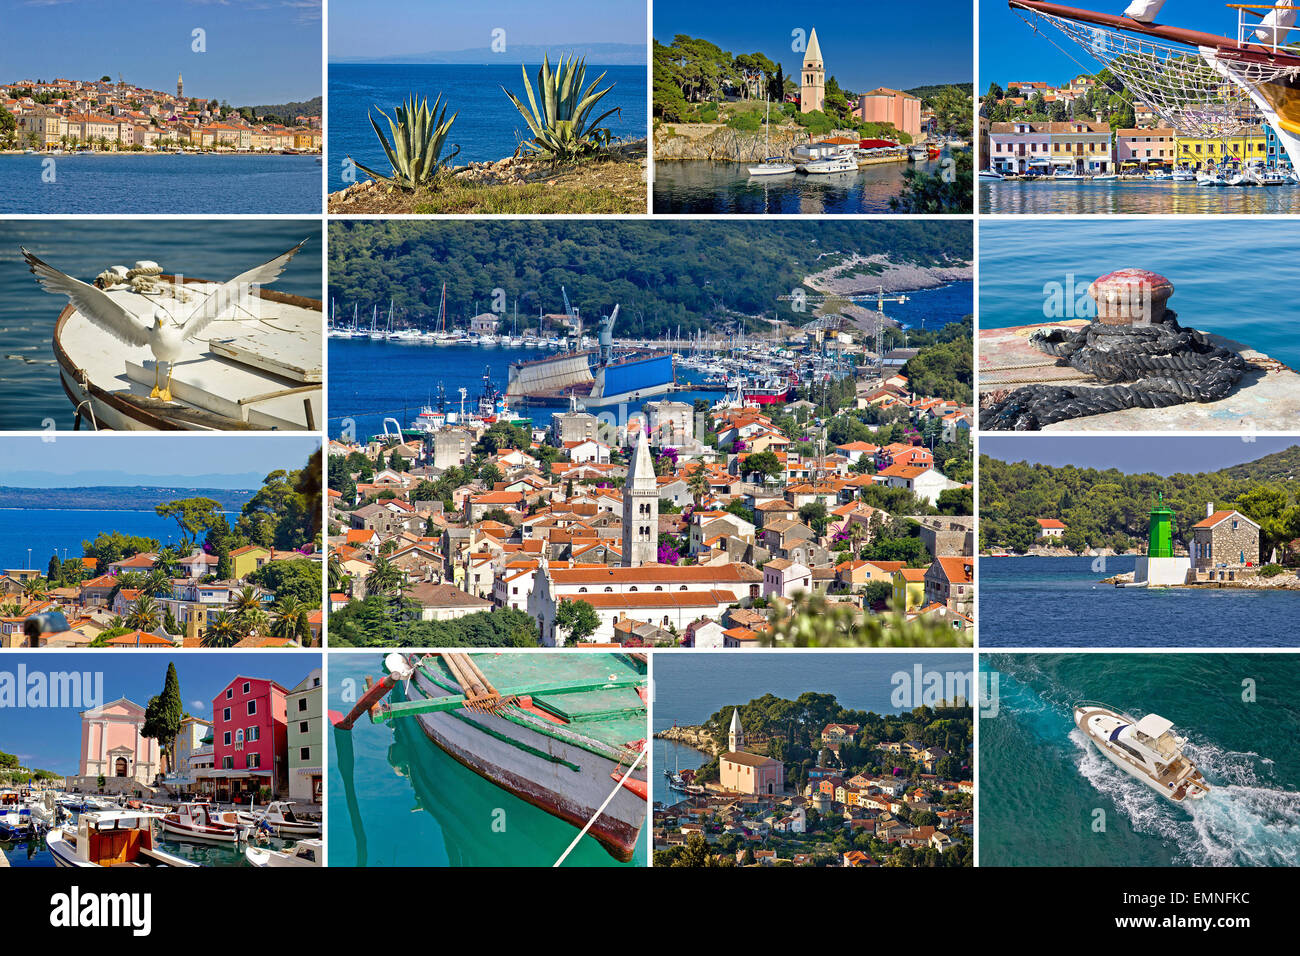 Island of Losinj tourist destination collage postcard, Croatia Stock Photo